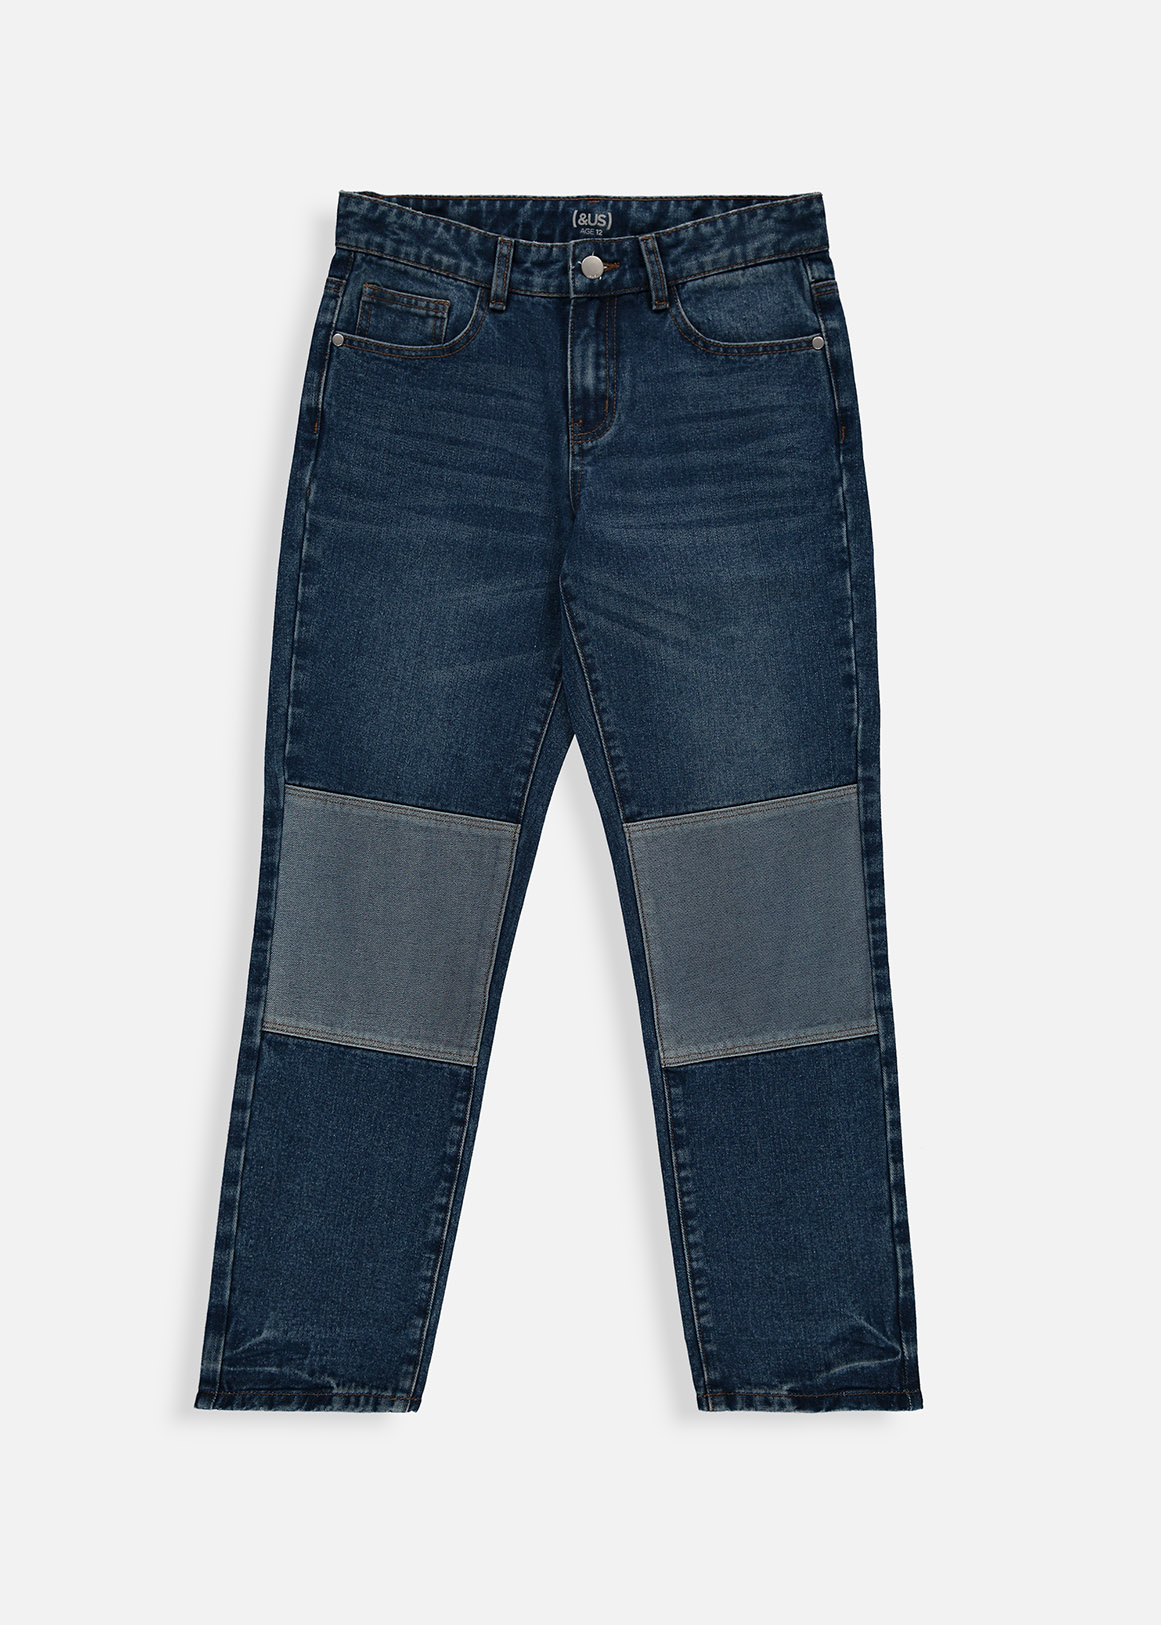 Adjustable Knee Patch Denim Jeans | Woolworths.co.za